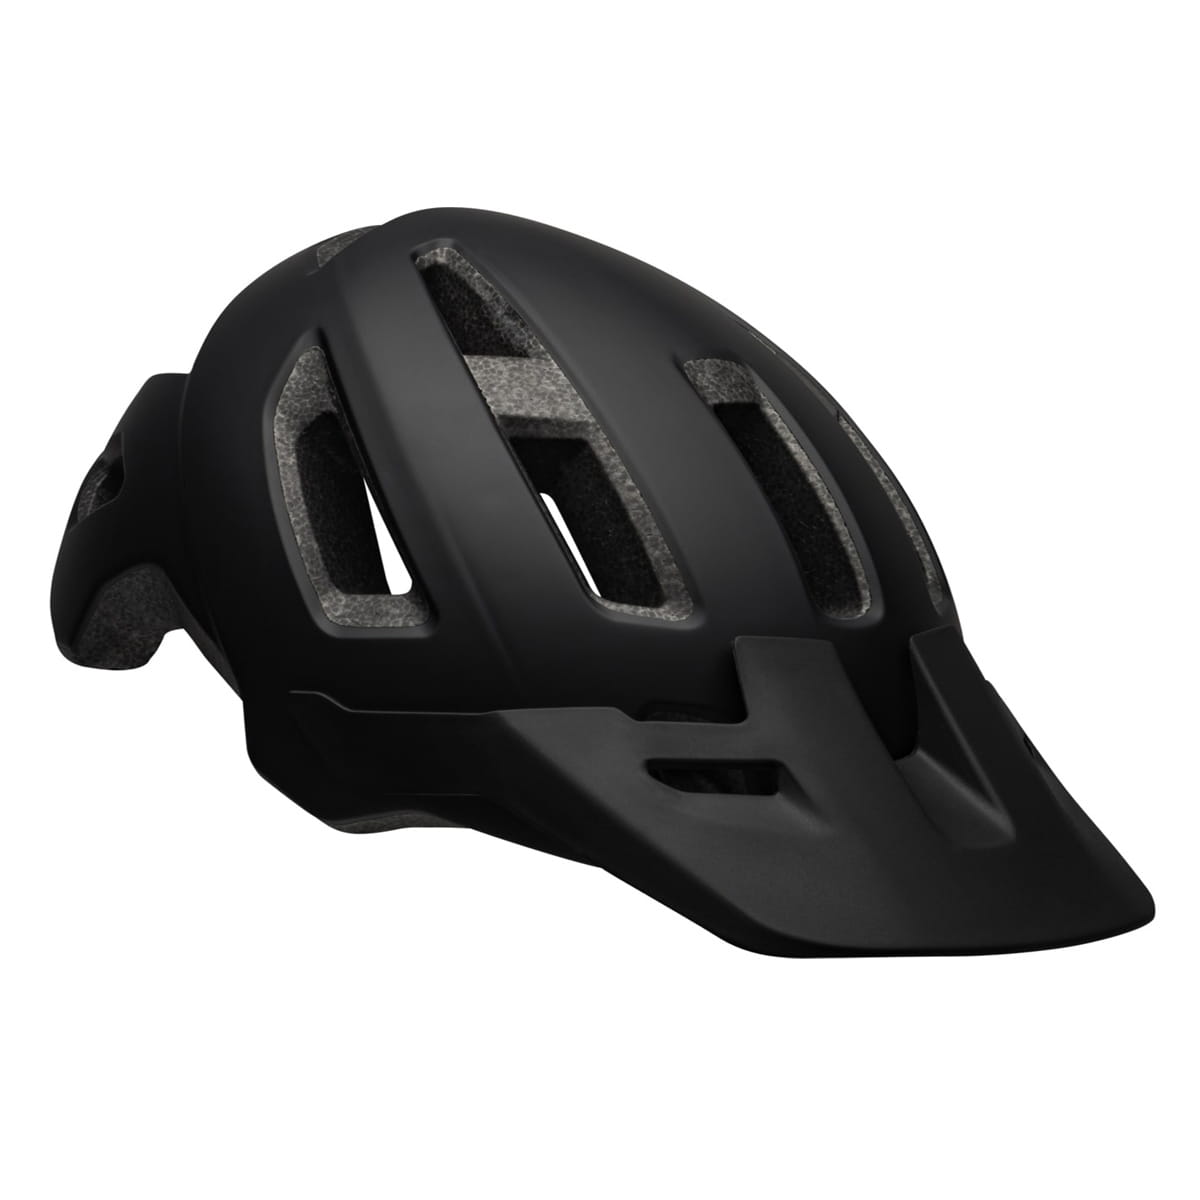 helmet for trail riding